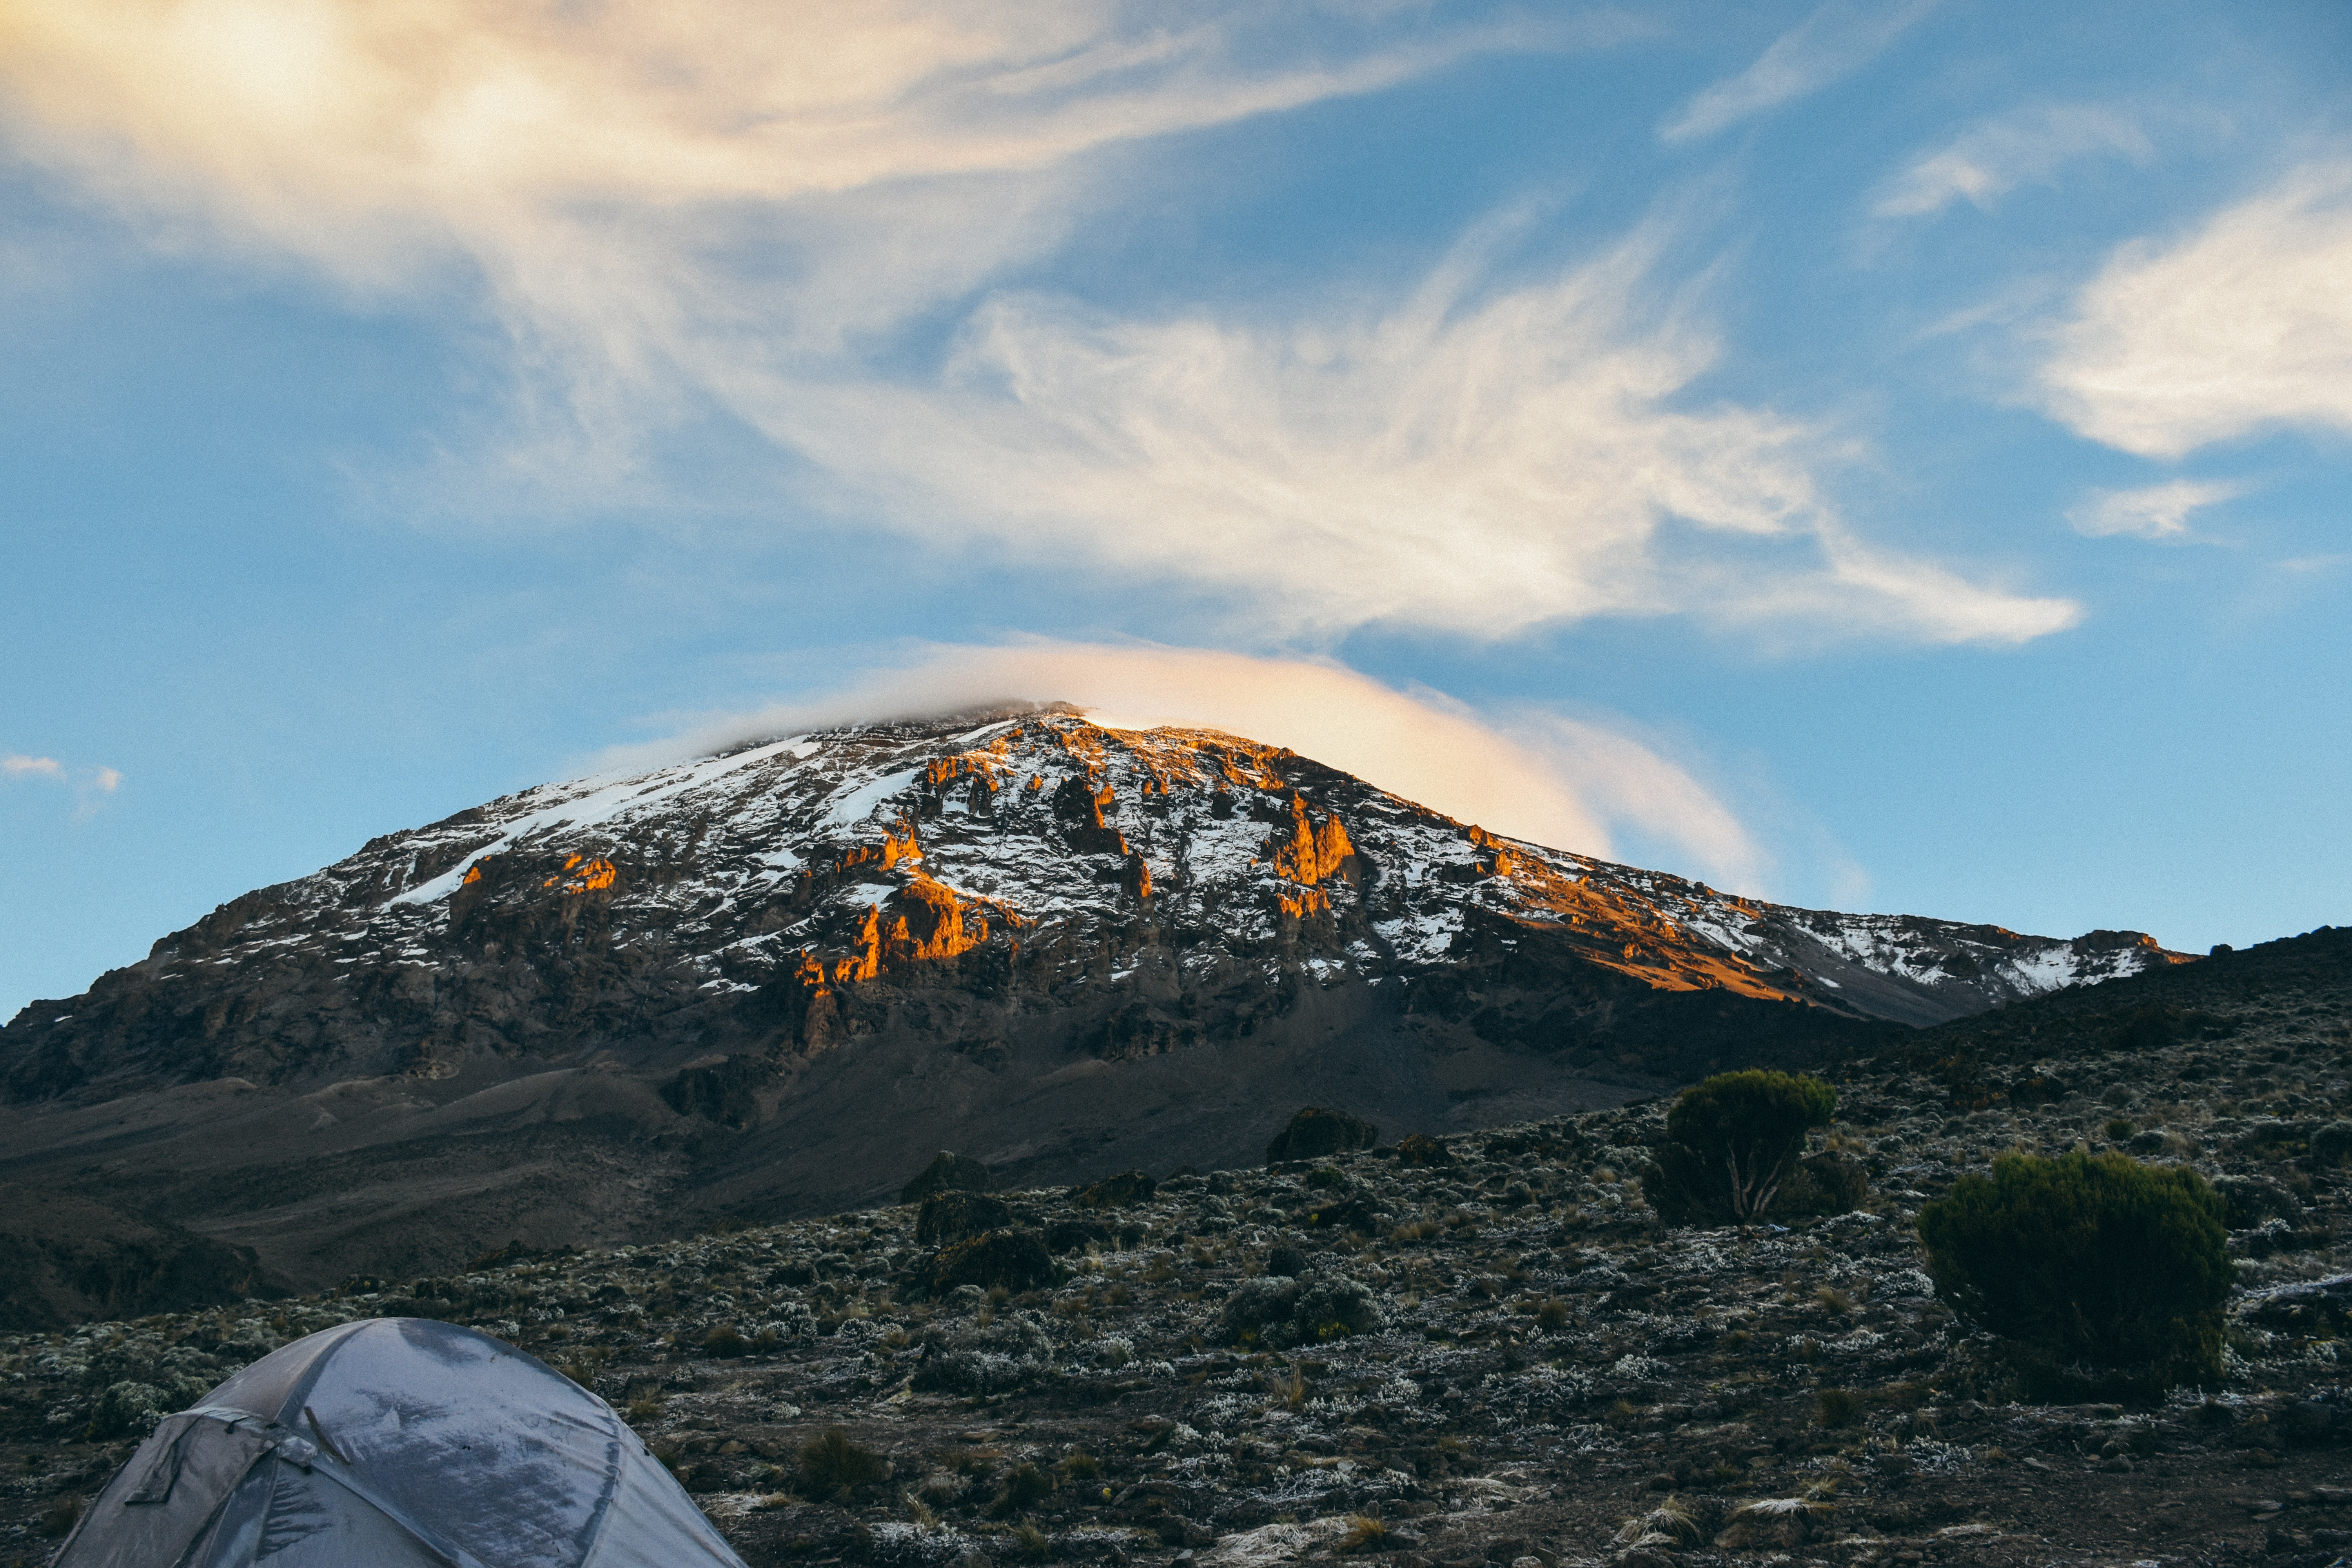 1. Mount Kilimanjaro